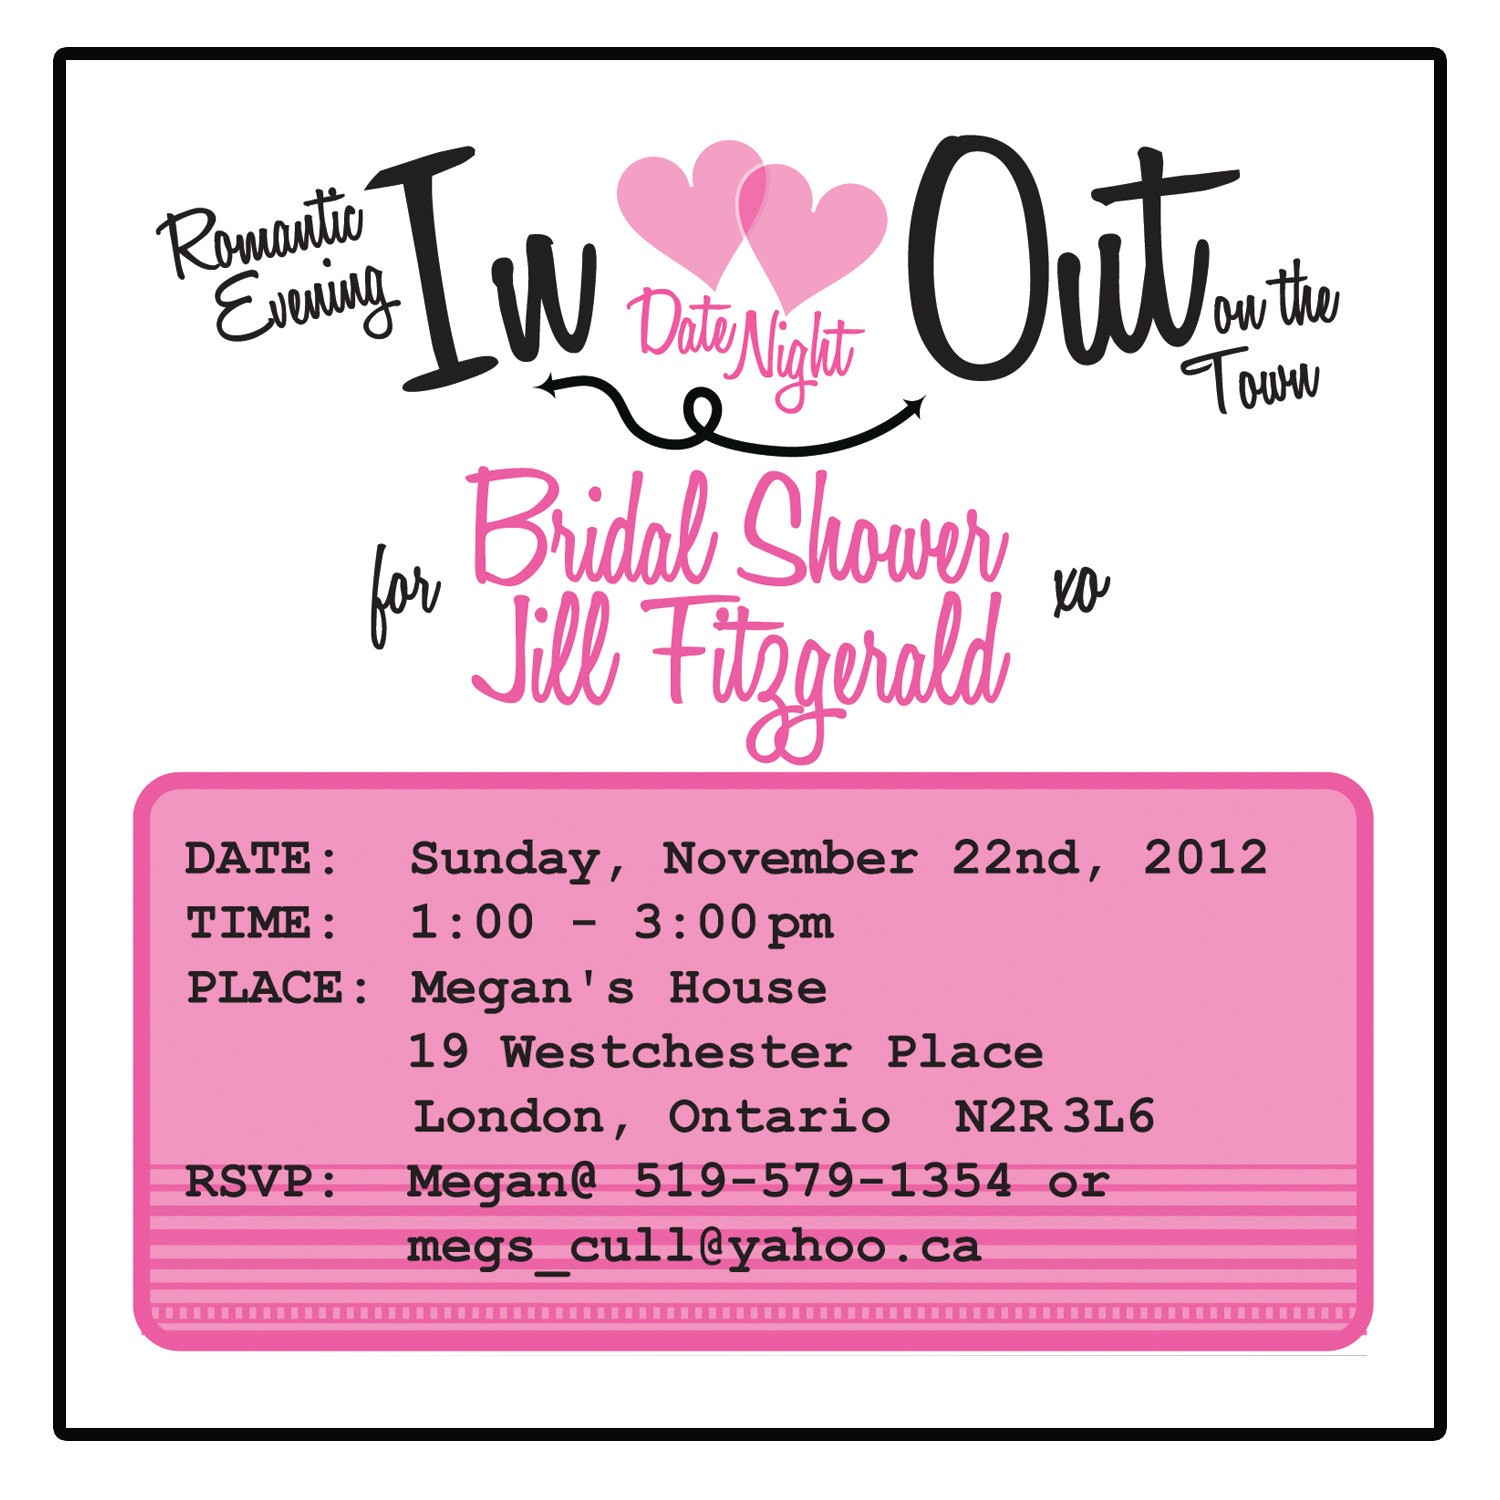 bridal shower invitation date night